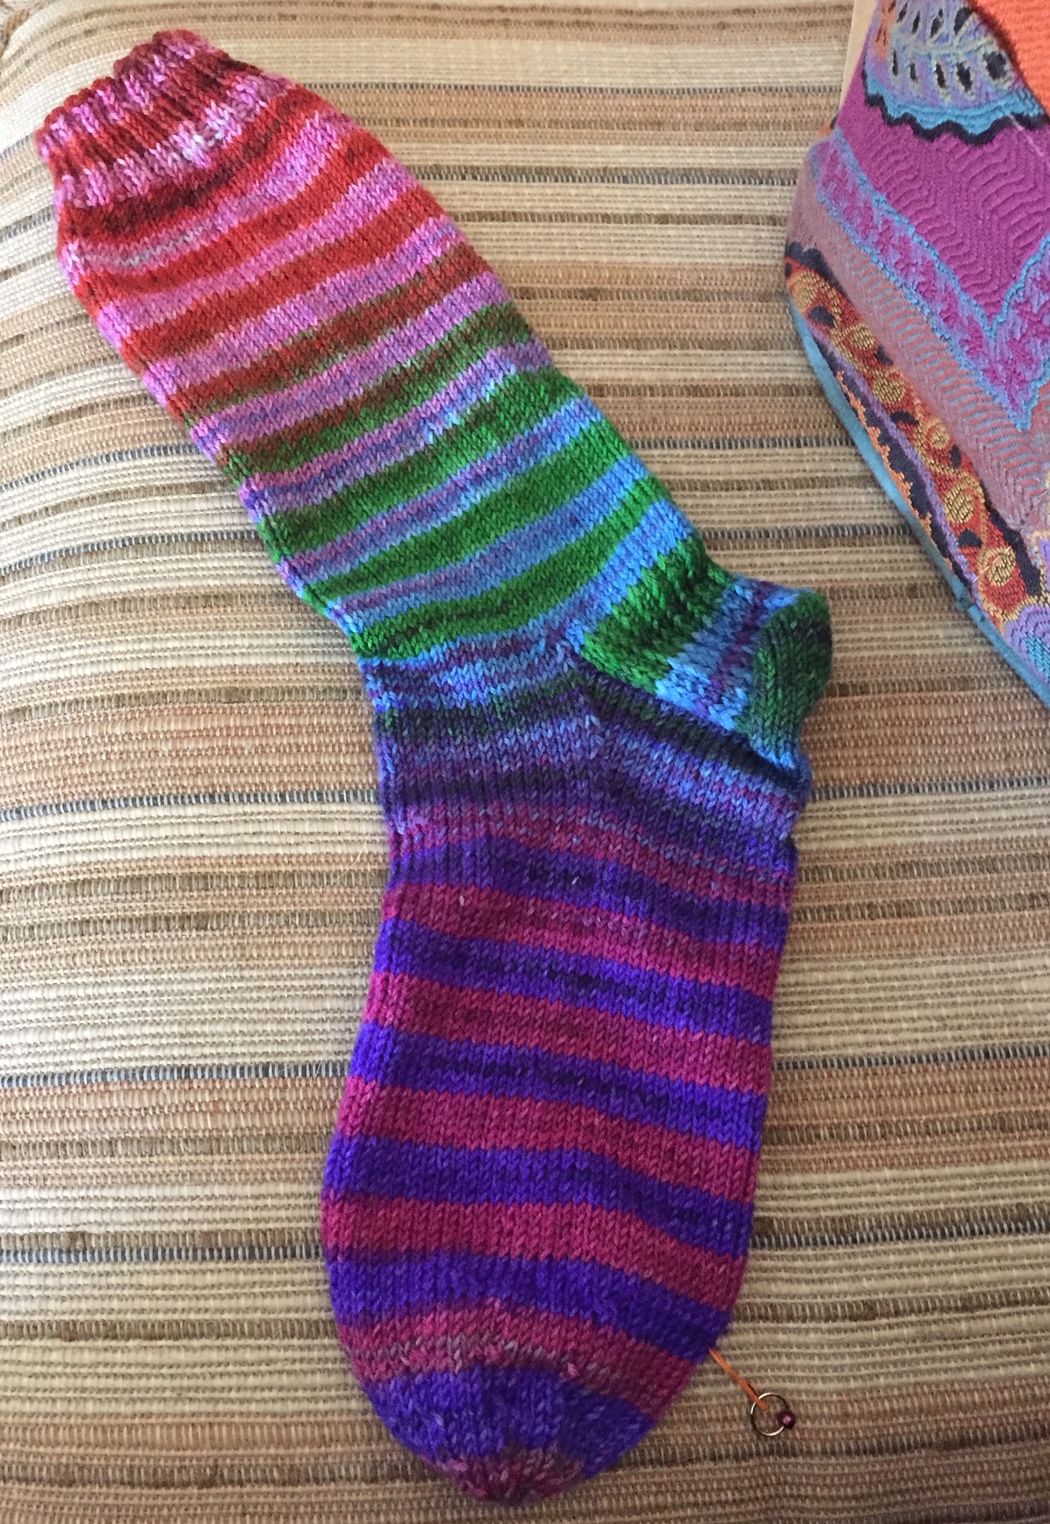 learn to knit socks IYS Omaha